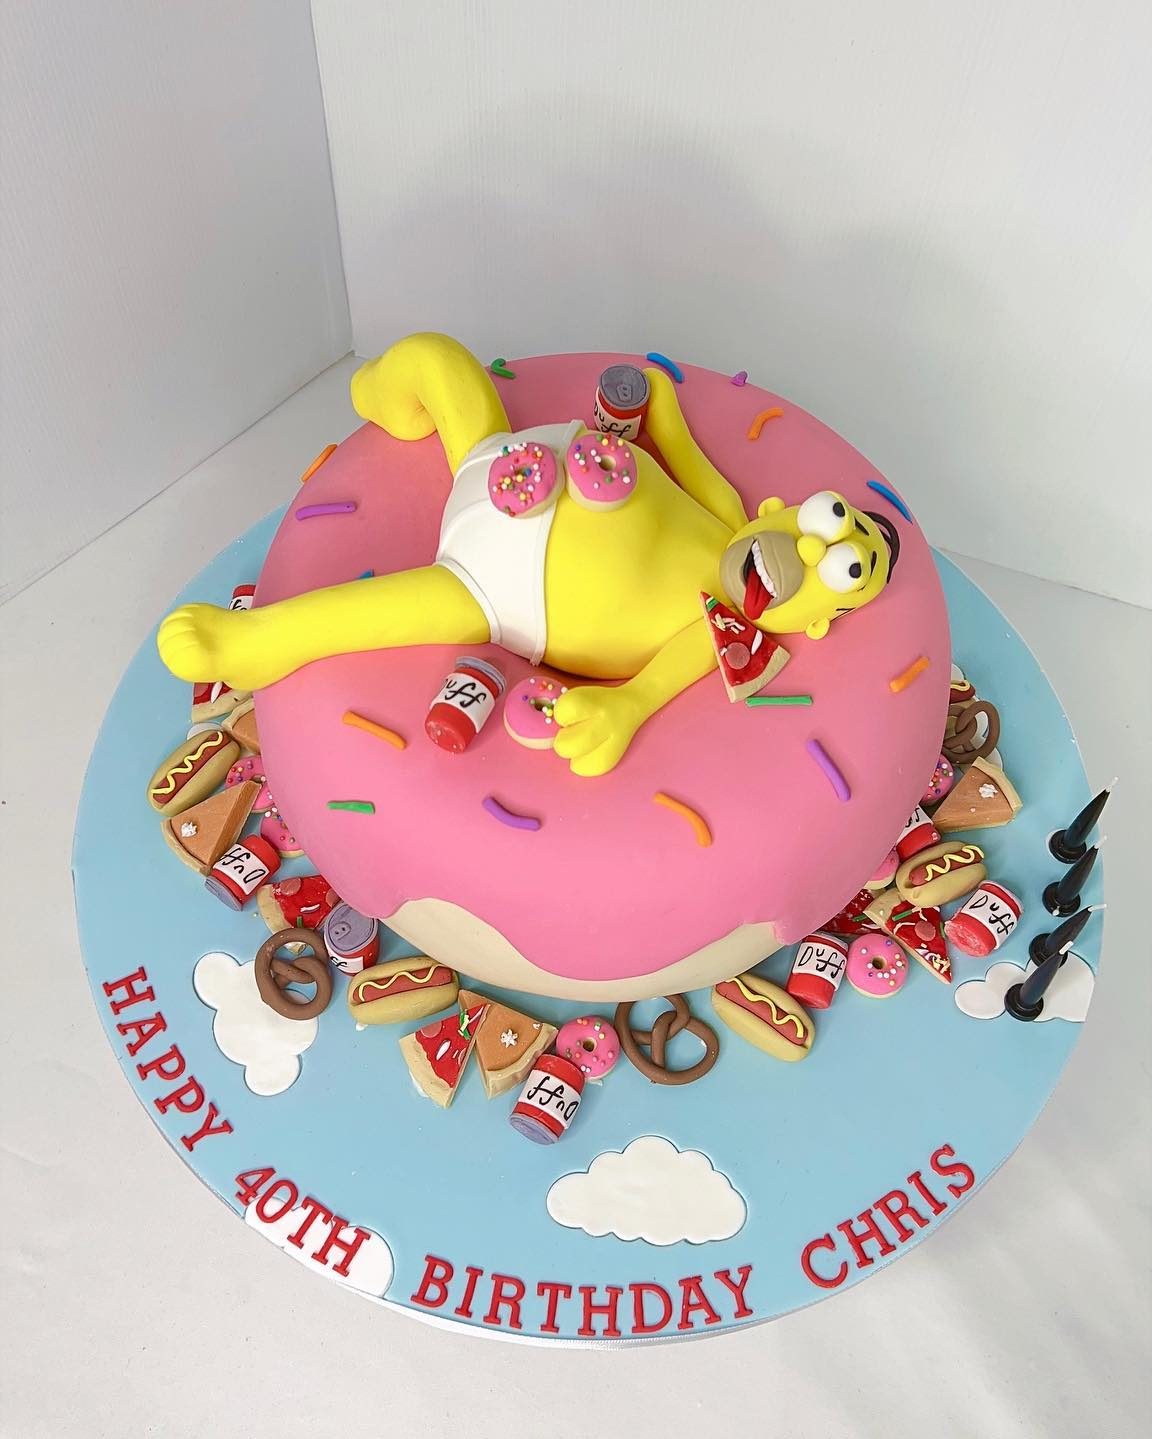 Malefemale Custom Adult Birthday Cake Designs Order Online 0682